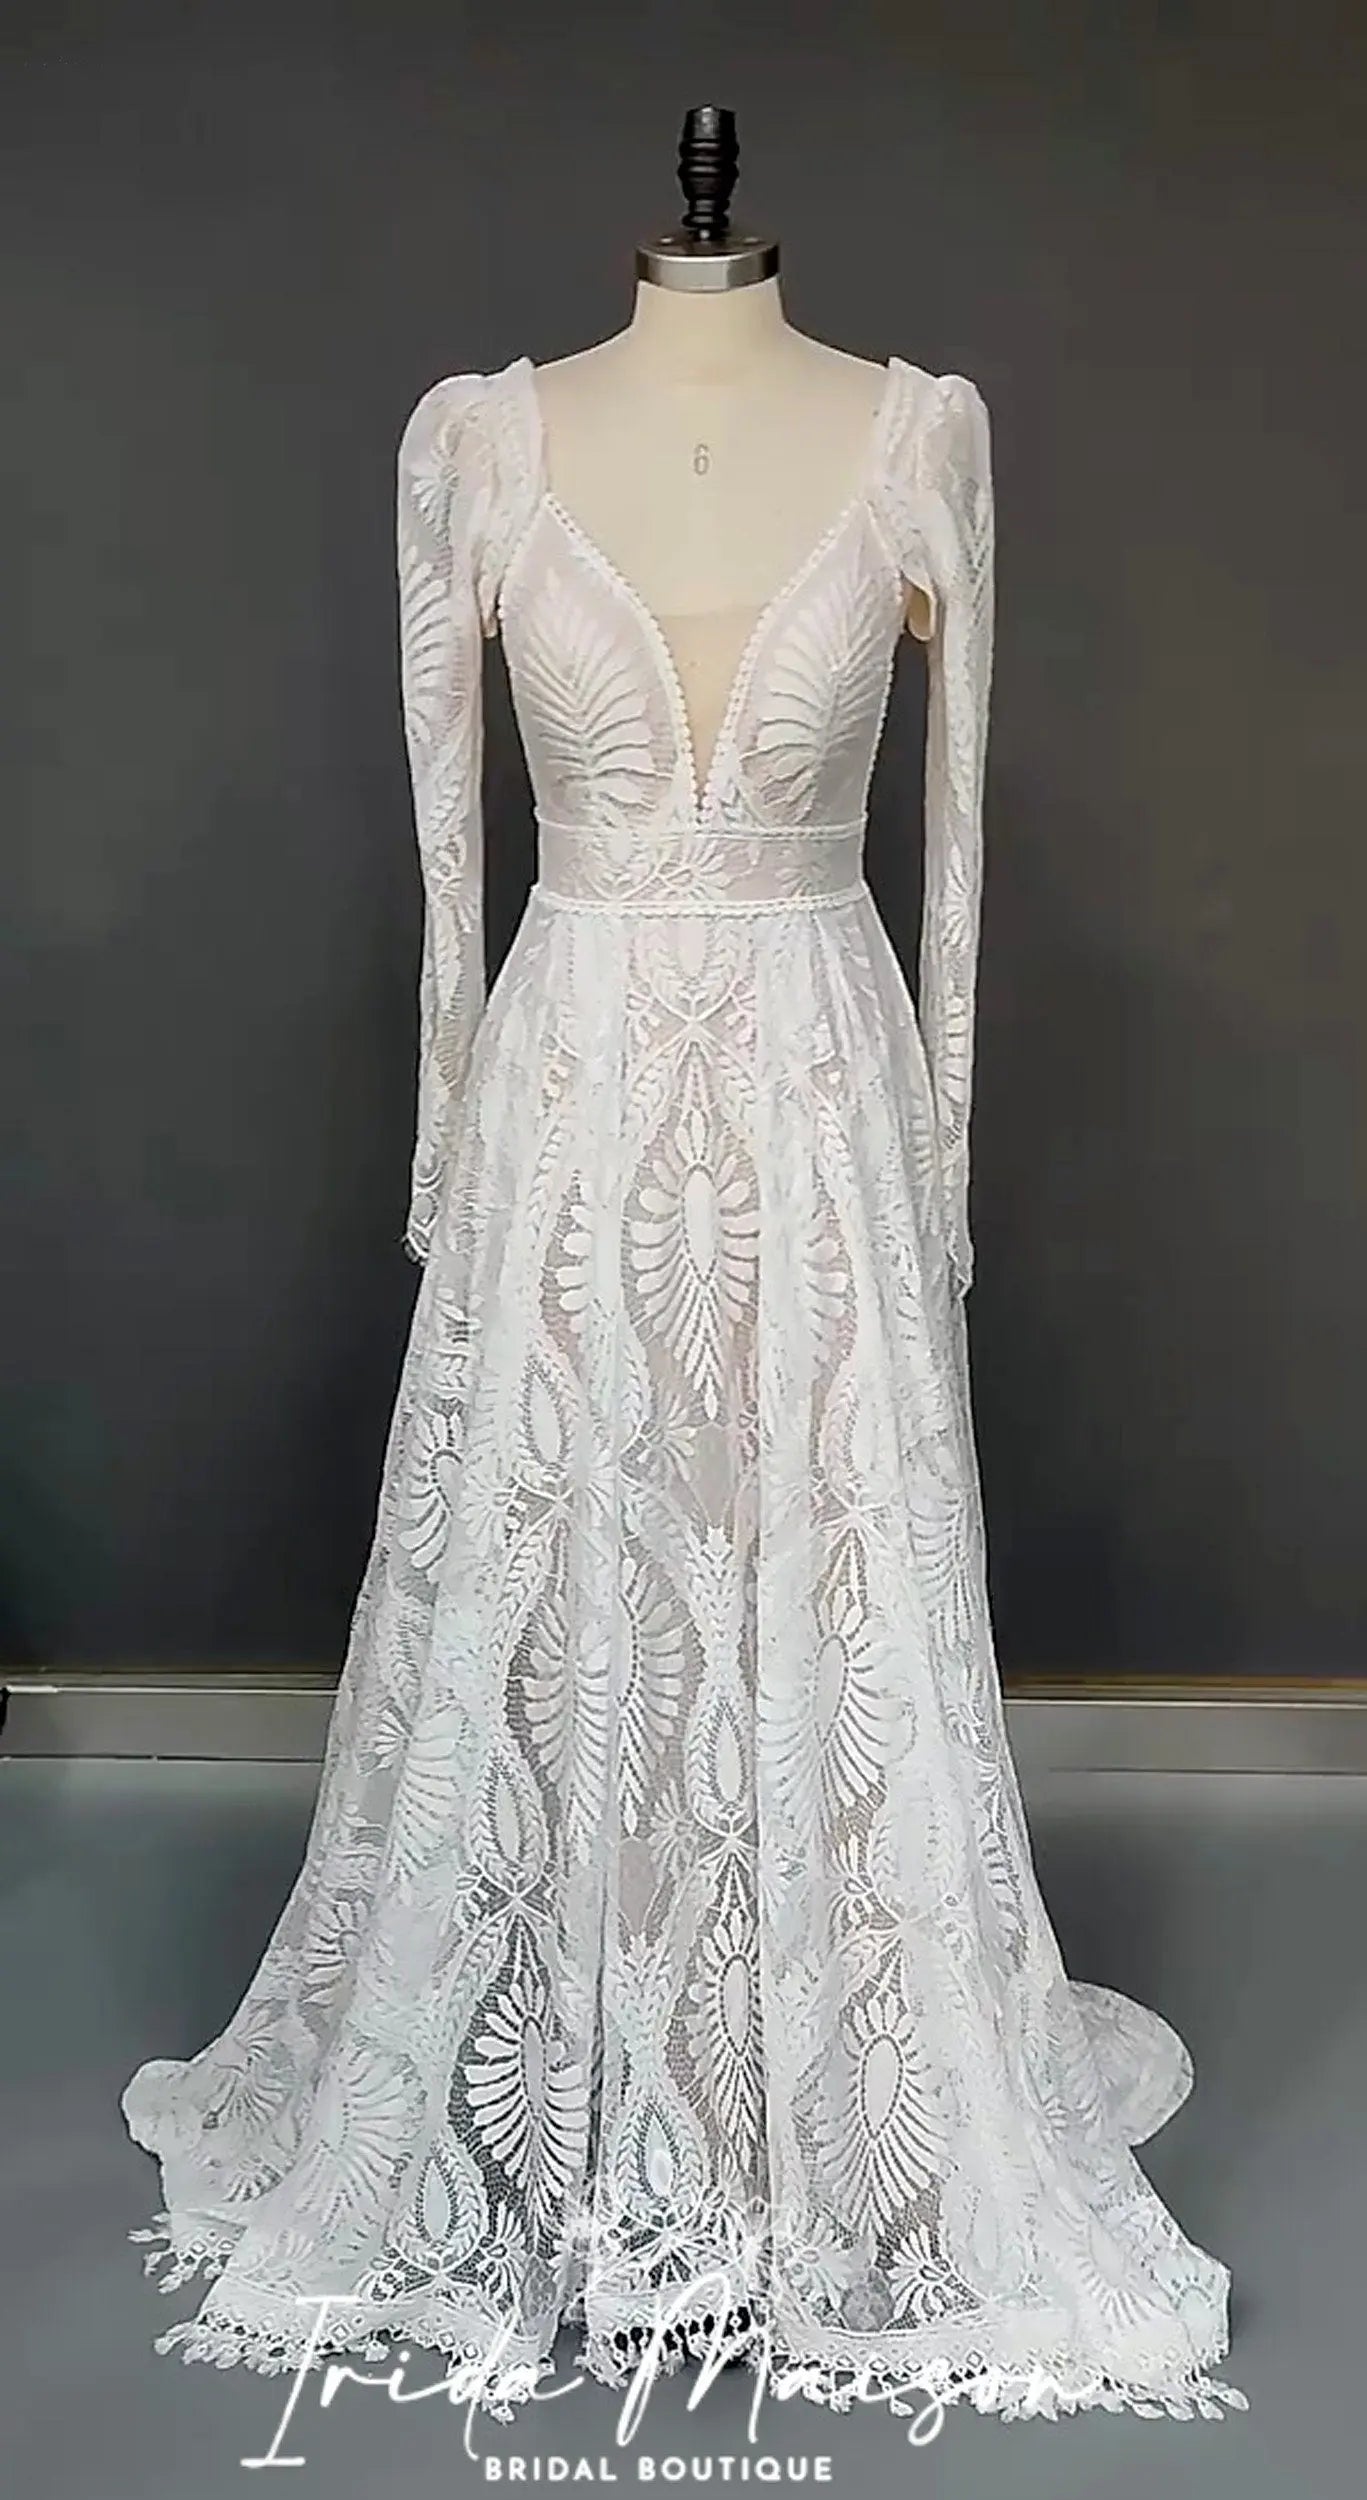 Bohemian elegant Lace Wedding Dress /removable sleeves shovel/ Beach wedding dress / bohemian lace dress/ wedding dress /spaghetti straps